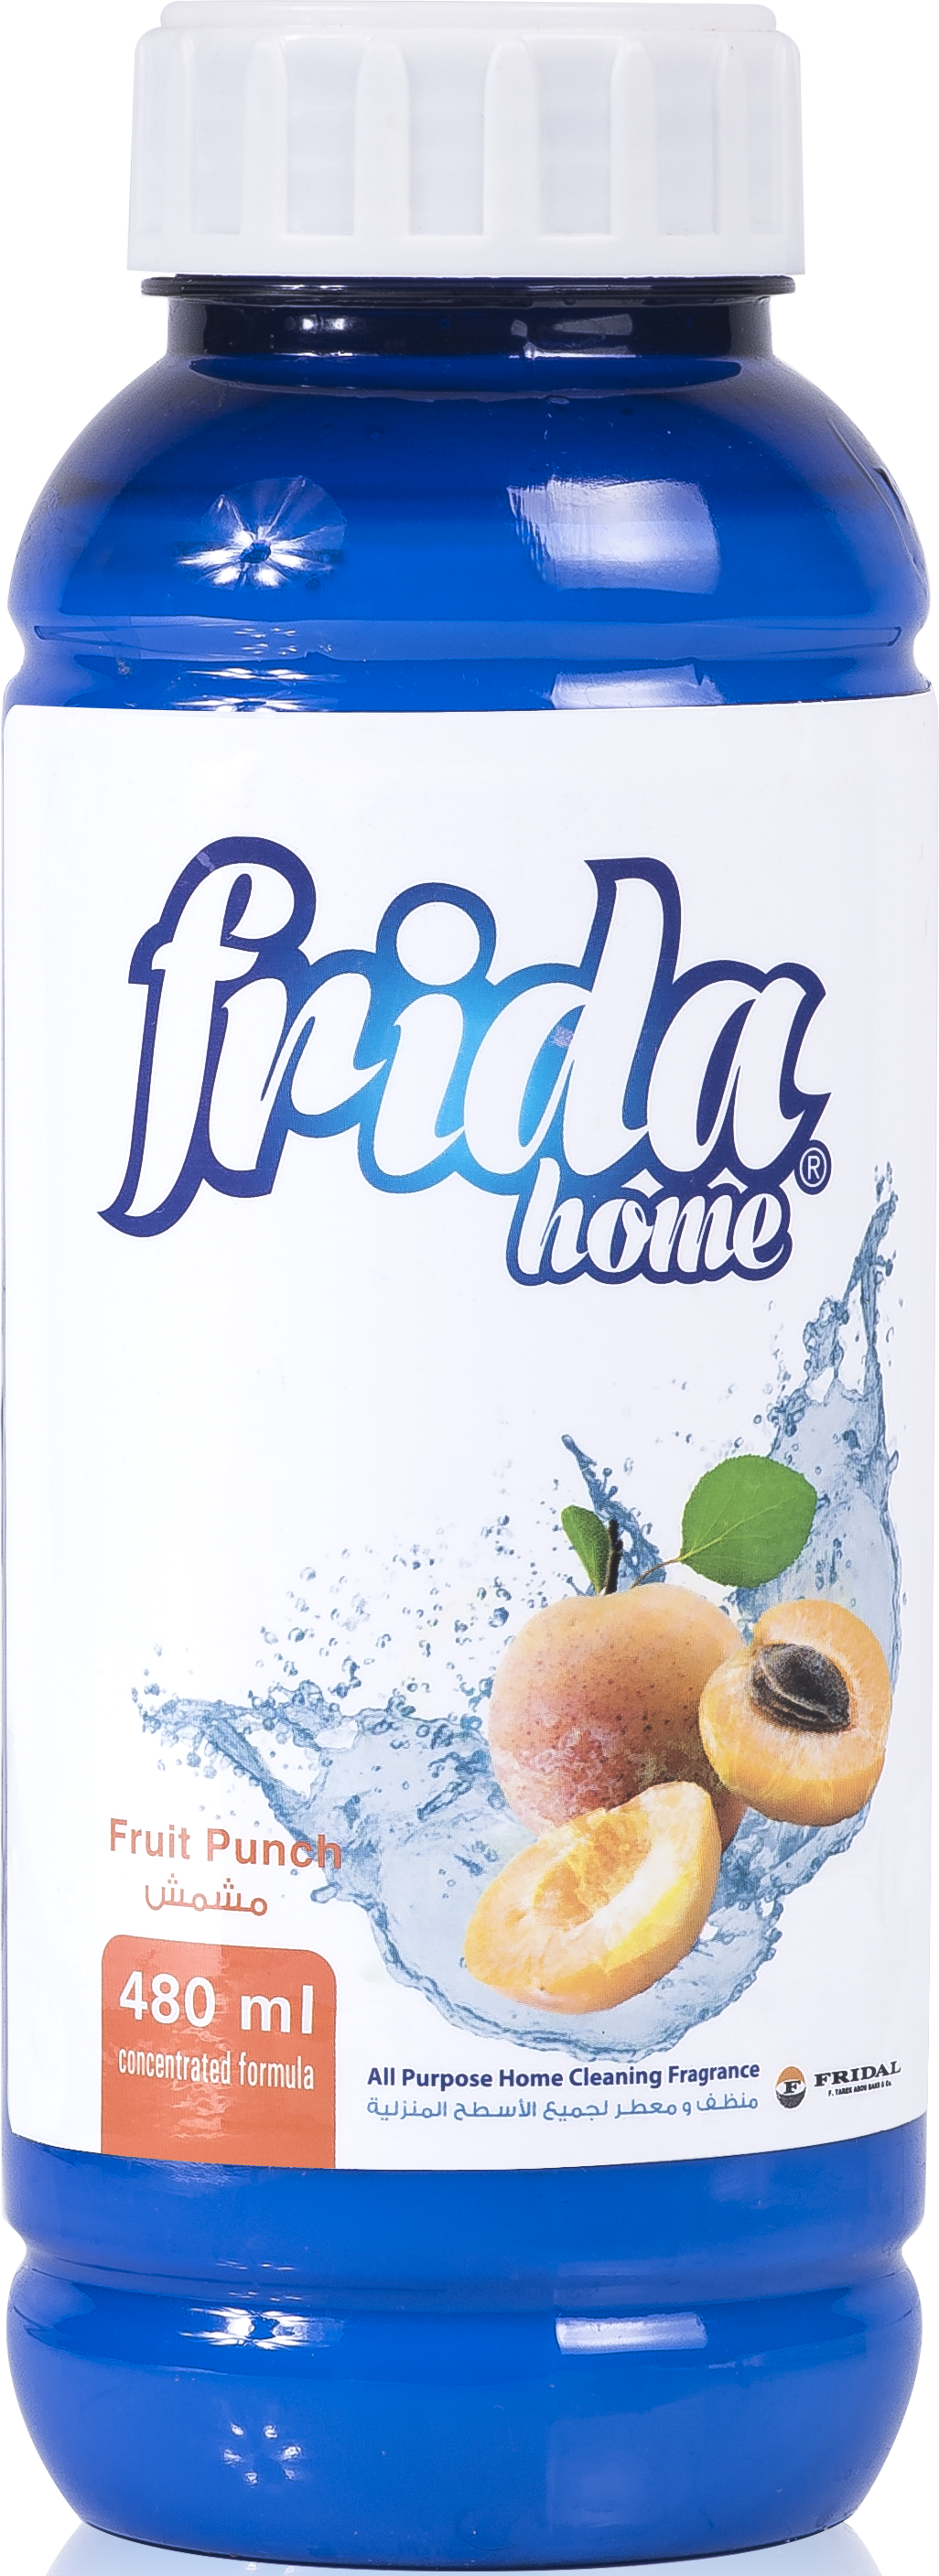 Frida Home "Fruit Punch"